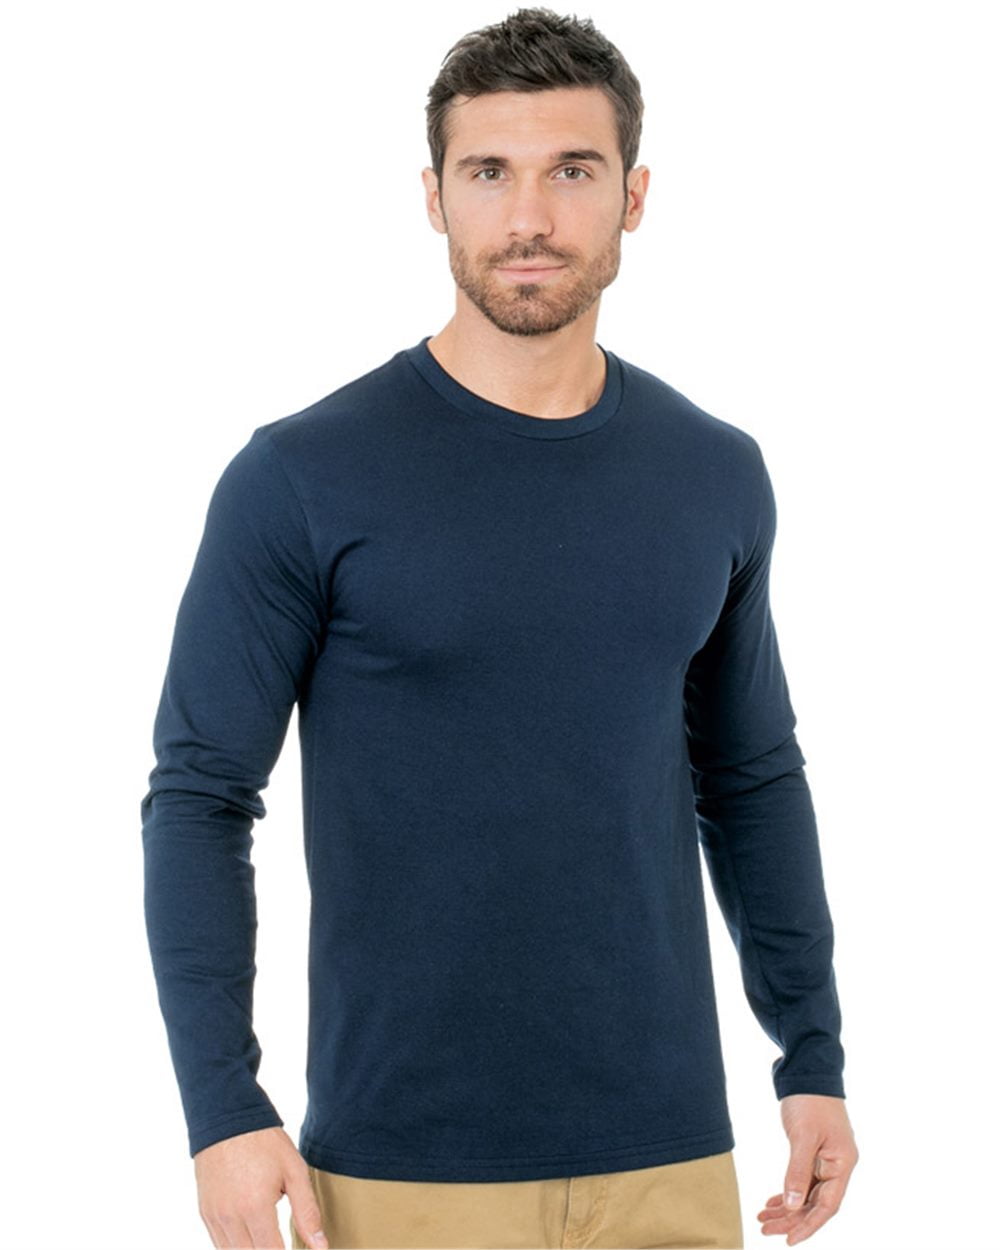 2XL Bayside Apparel Unisex Fine Jersey Long Sleeve Crewneck T-Shirt Navy